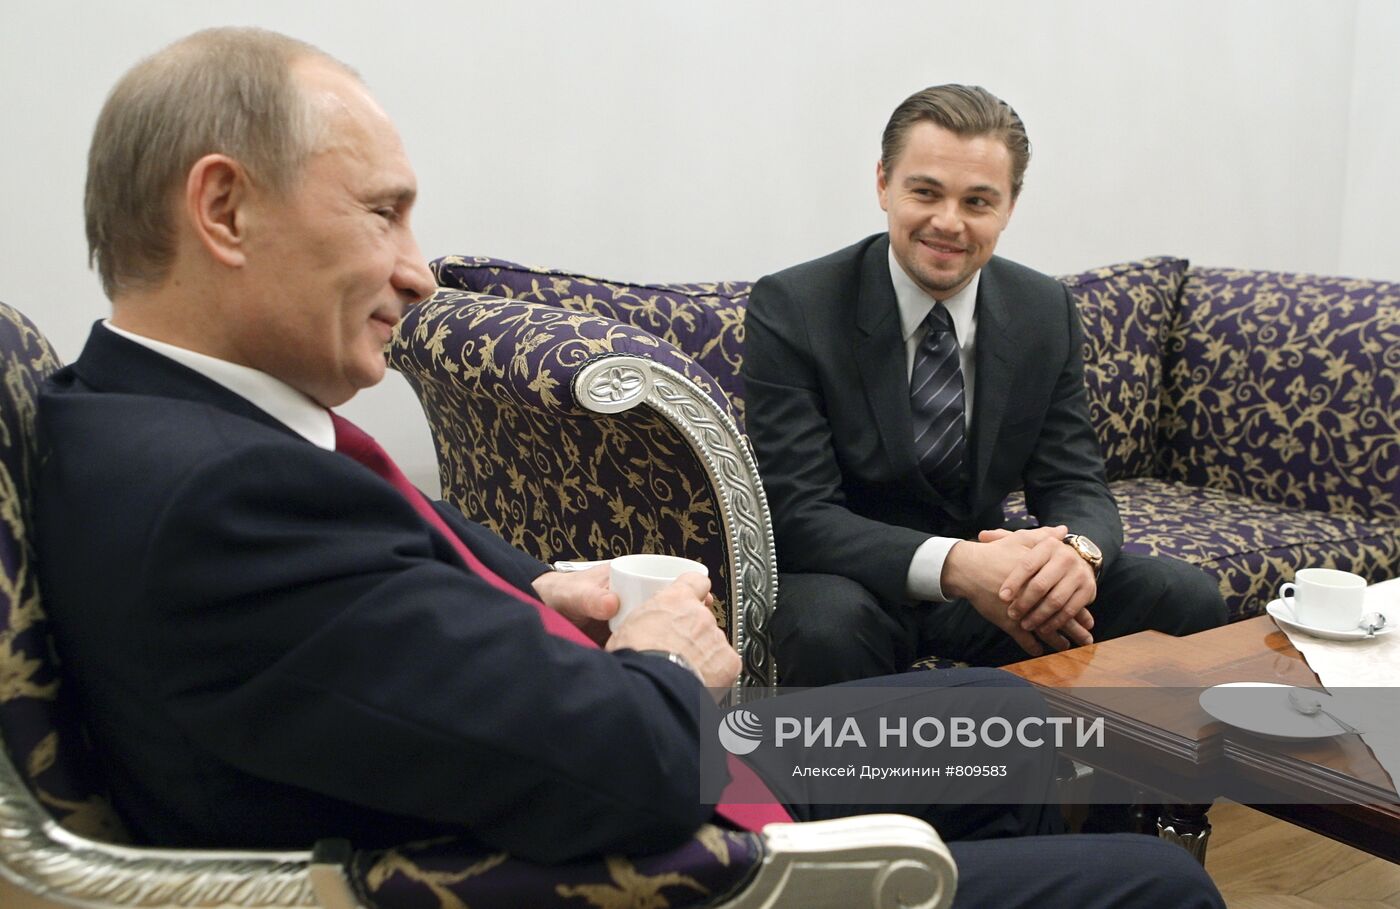 Встреча Владимира Путина и Леонардо Ди Каприо в Санкт-Петербурге